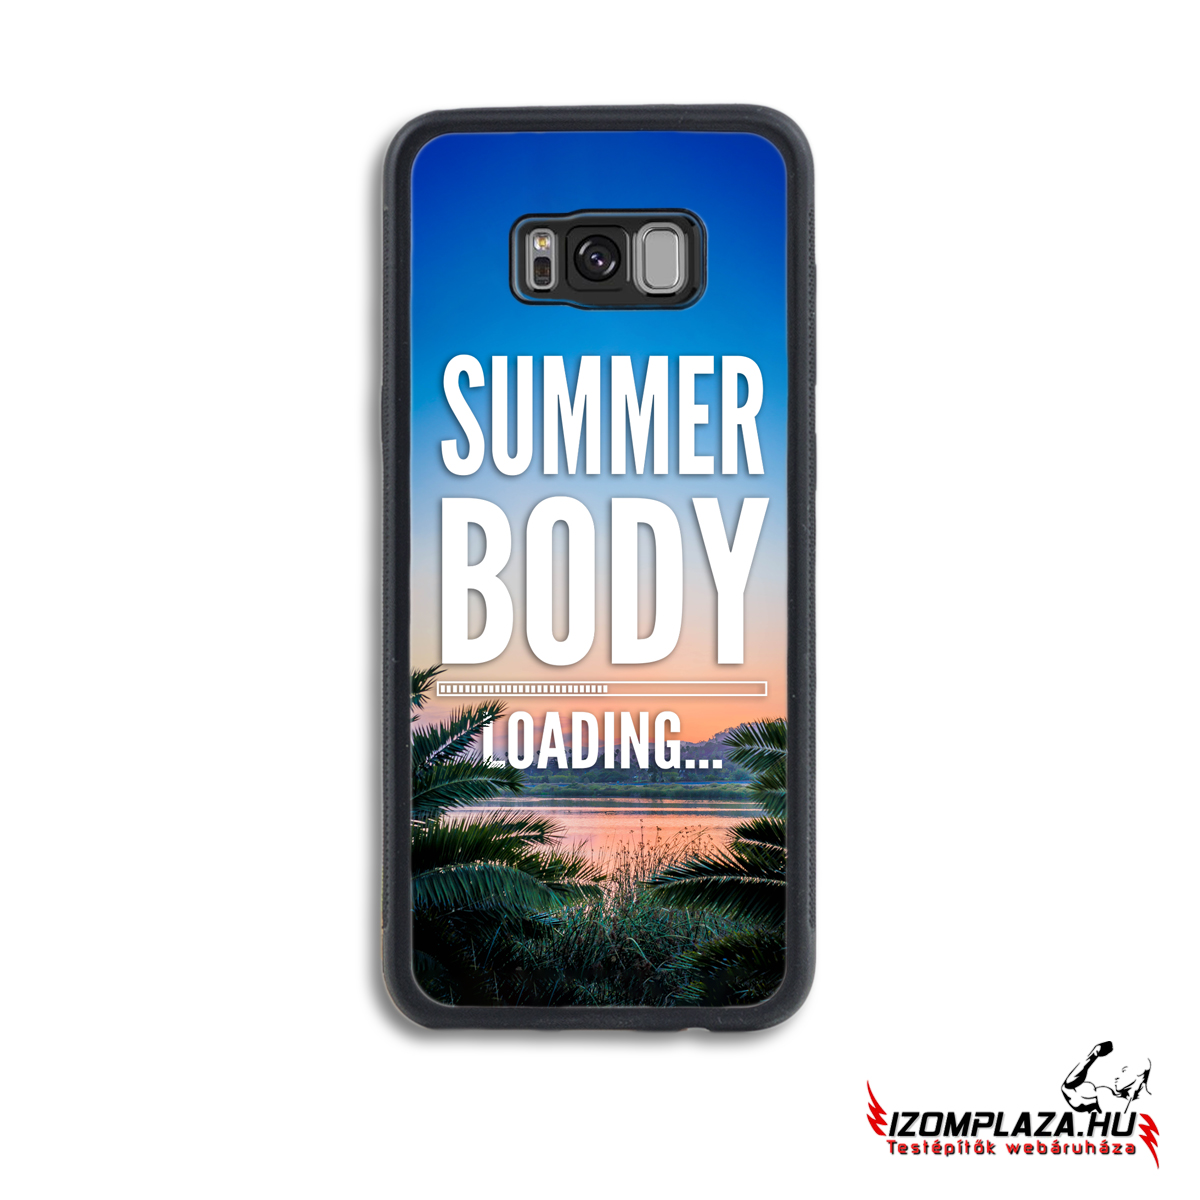 Summer body loading... - Samsung telefontok 